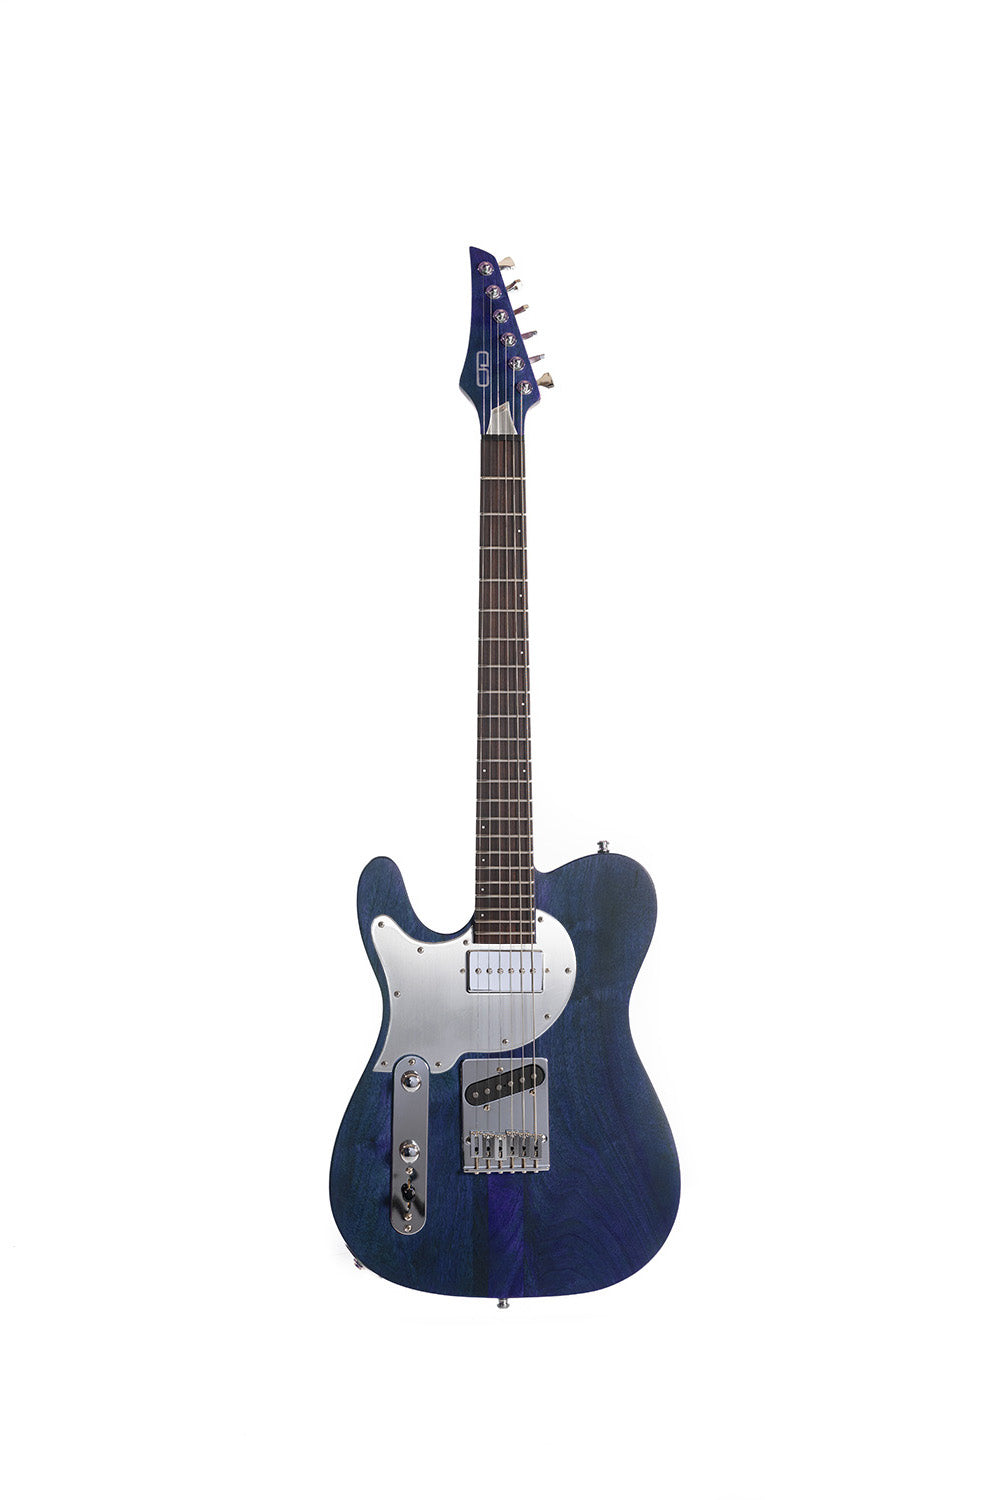 TC_Walnut_Deep_Blue_front_Left_Handed_De_Leeuw_Guitars_Paris_Made_in_France_Luthier_Guitar_Maker_France_Neck_Through_Manche_Traversant